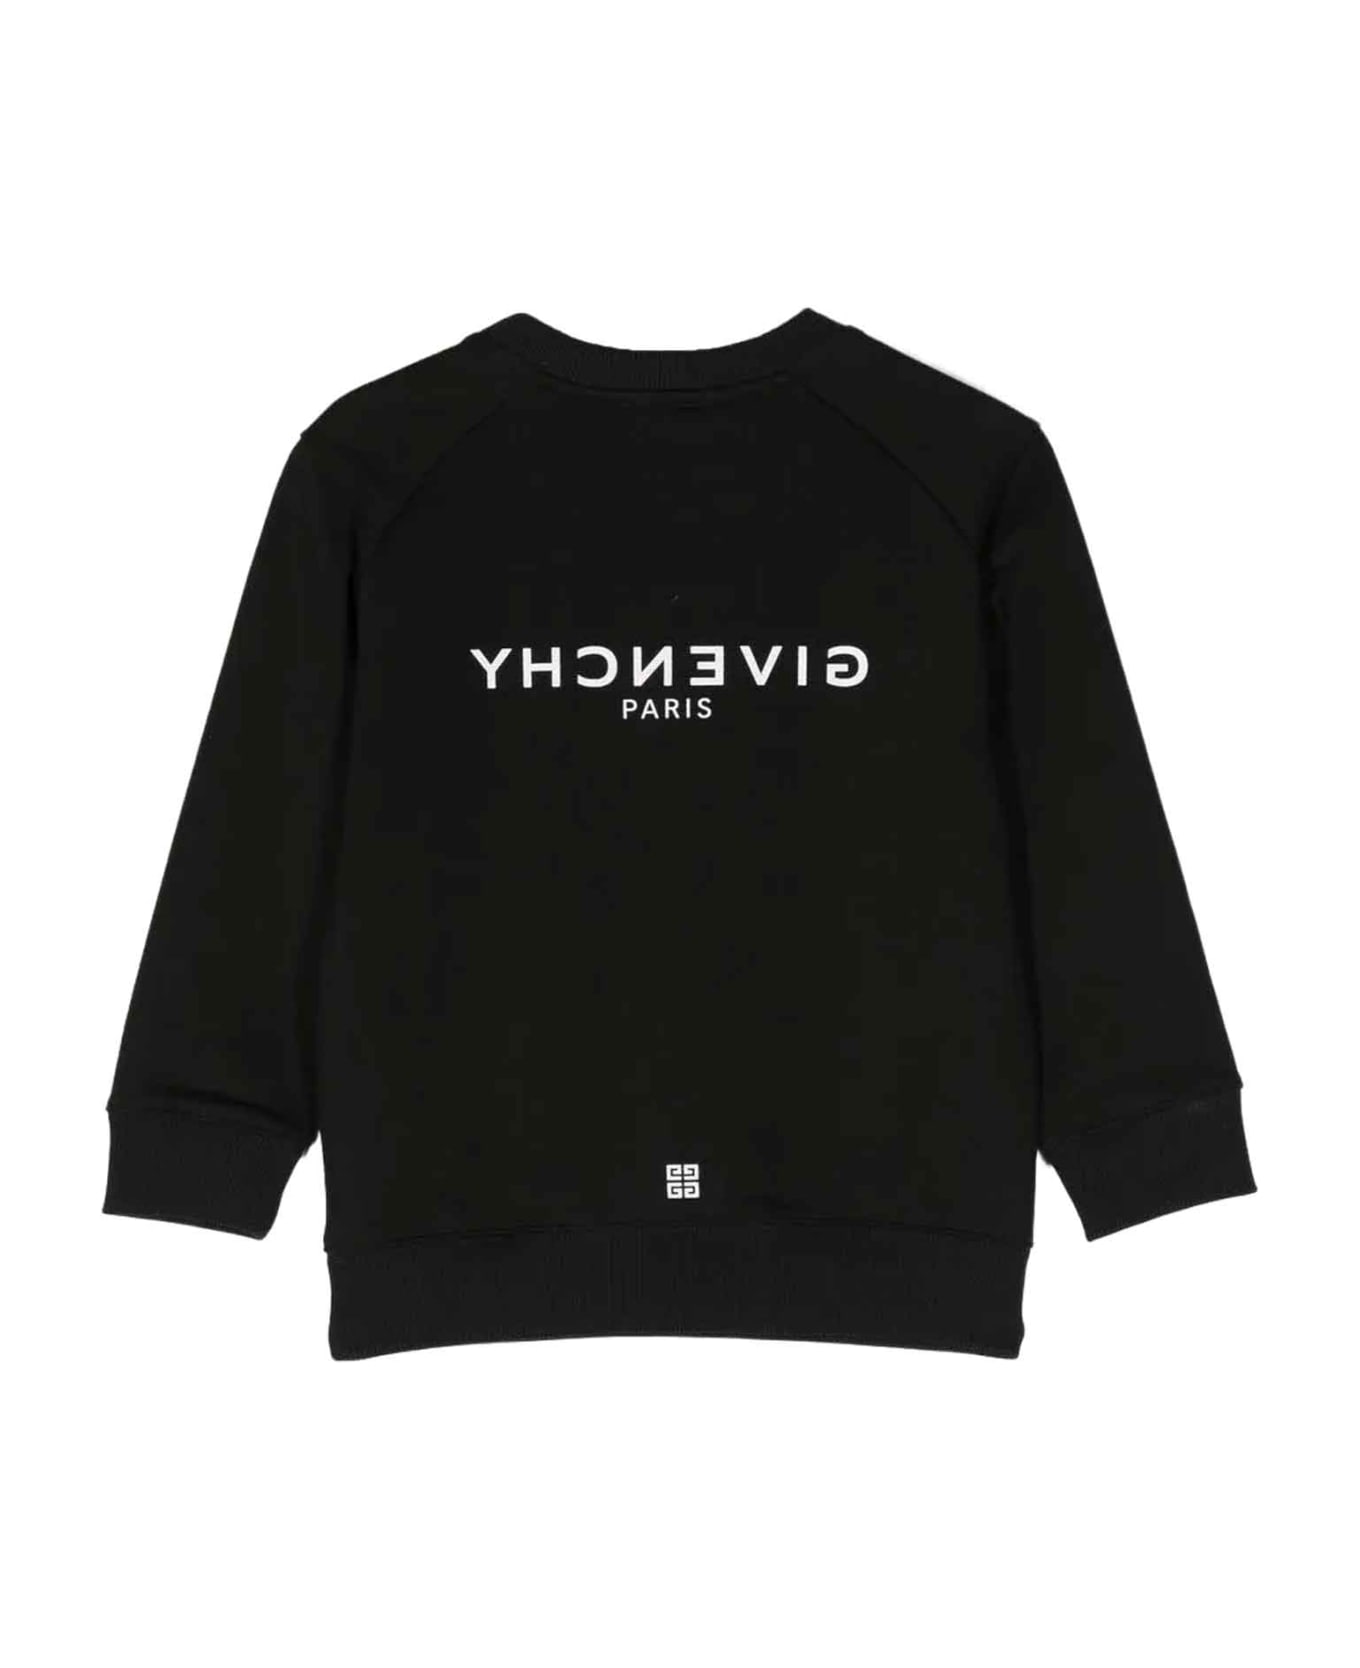 Givenchy Black Sweatshirt Boy - Nero